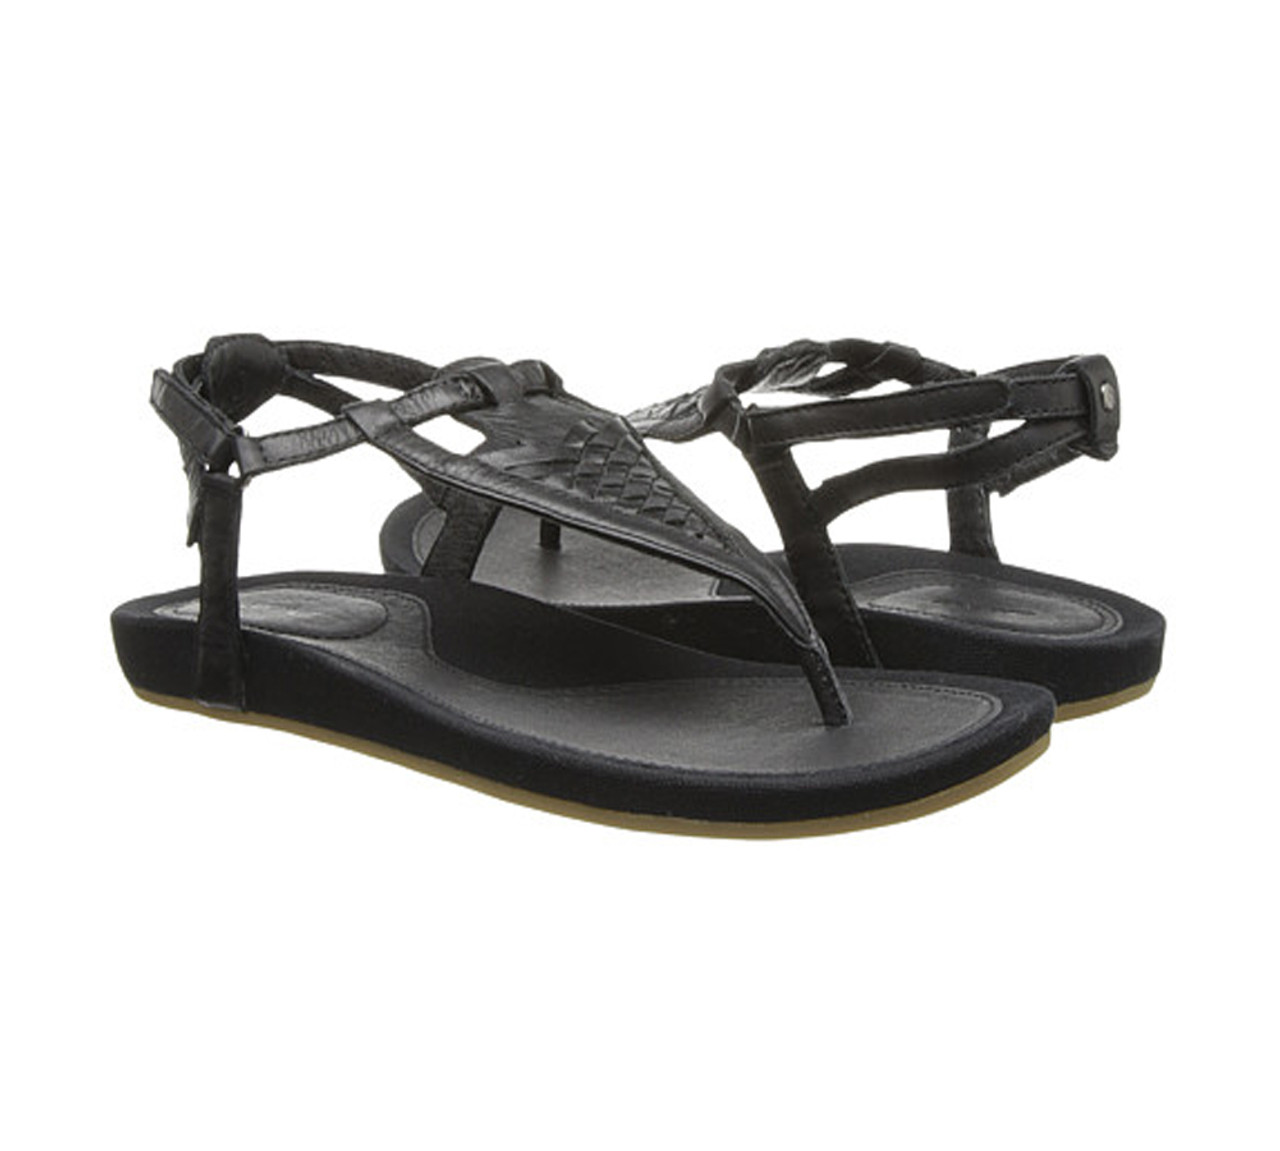 Lelie Cokes Dijk Teva Women's Capri Sandal - Black | Discount Teva Ladies Sandals & More -  Shoolu.com | Shoolu.com